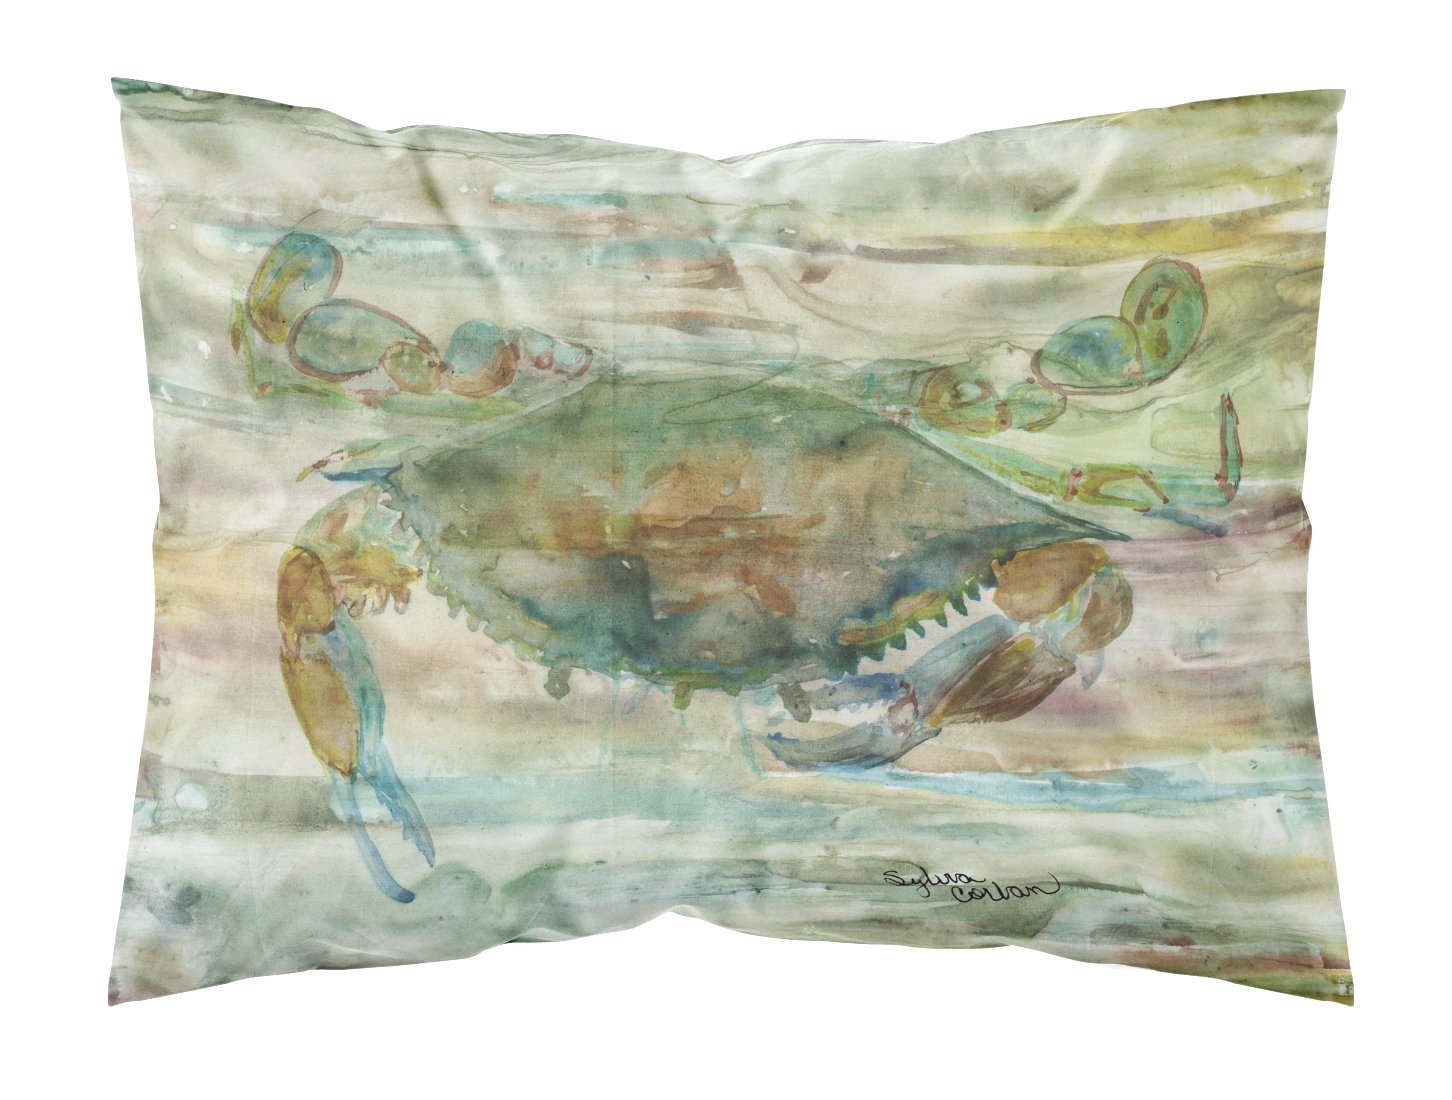 Crab a leg up Sunset Fabric Standard Pillowcase SC2015PILLOWCASE by Caroline's Treasures